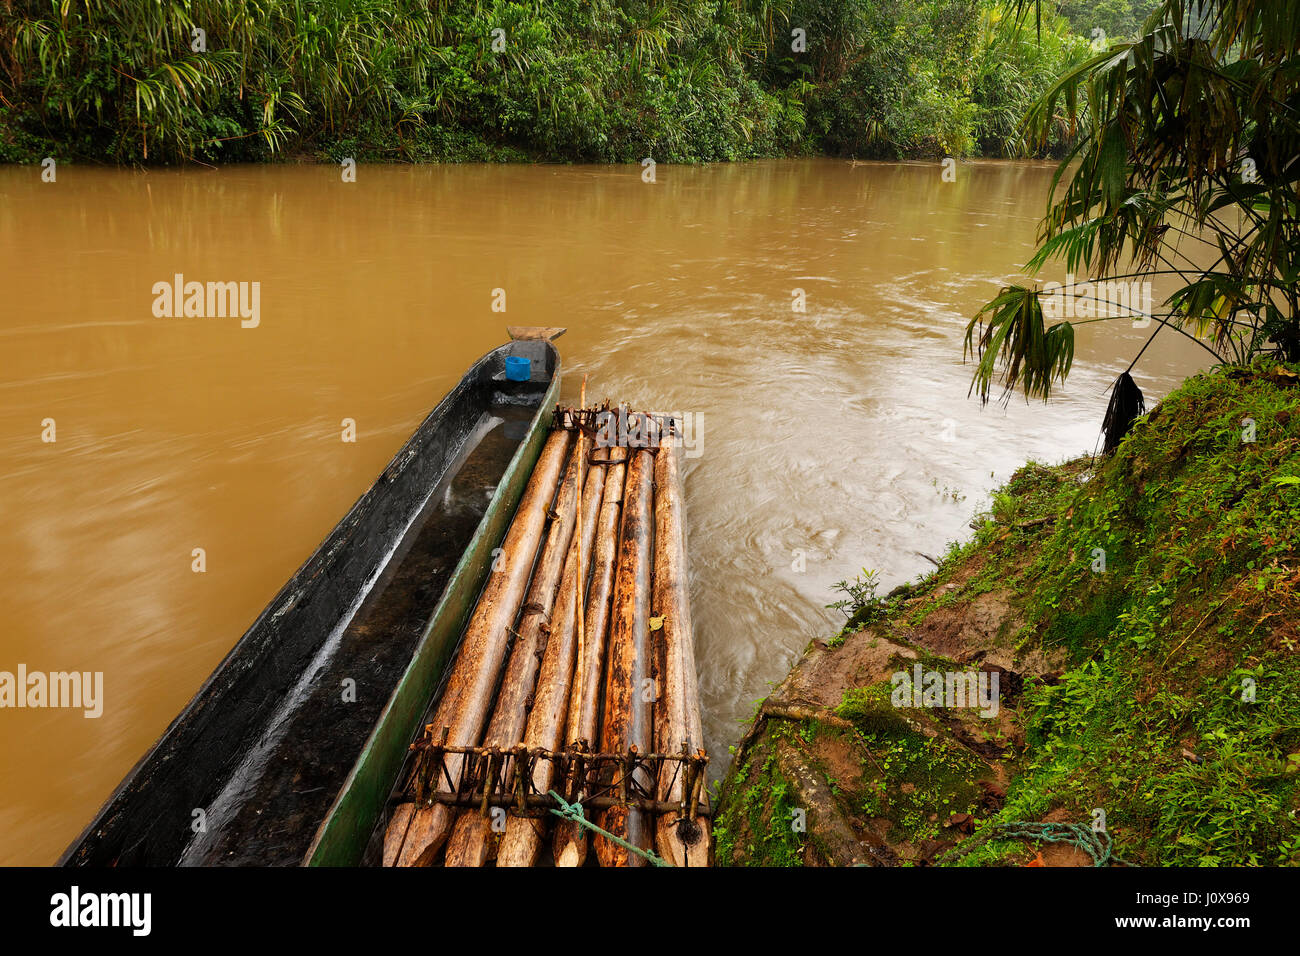 Wooden raft on a river in Ecuadorian Amazon Stock Photo